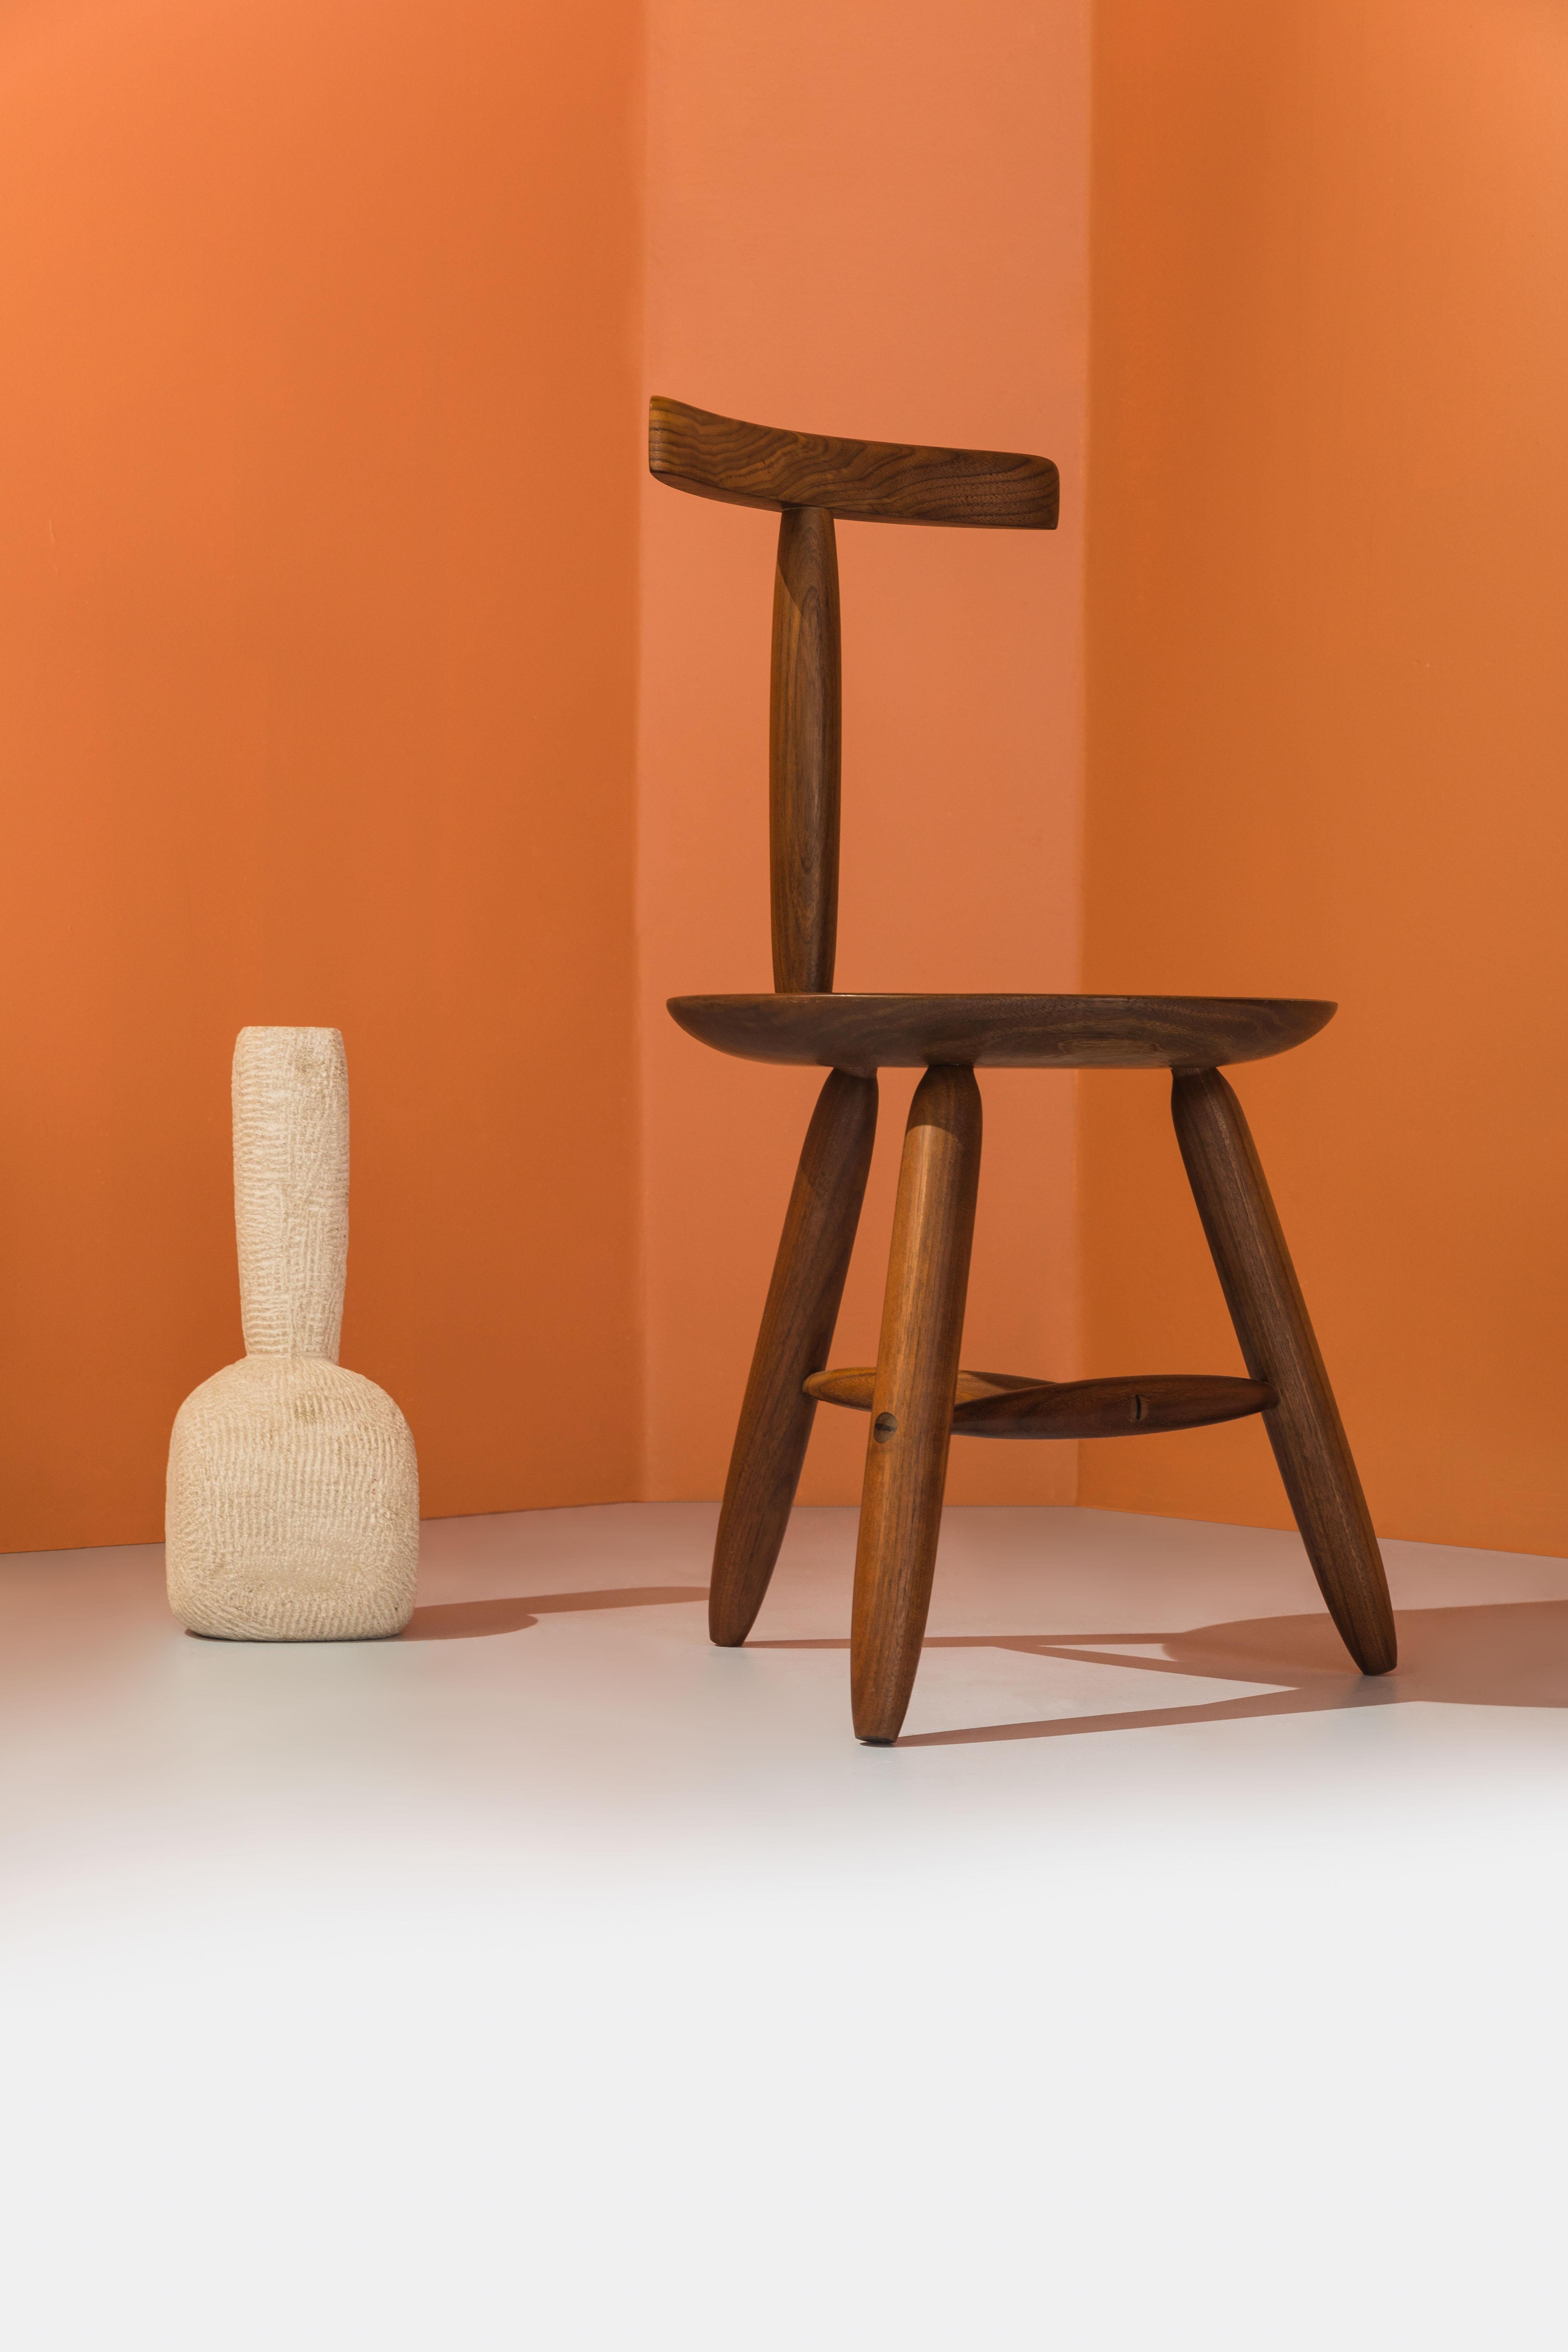 Scandinavian Modern Round Chair with Exquisite Joinery in Walnut by Birnam Wood Studio